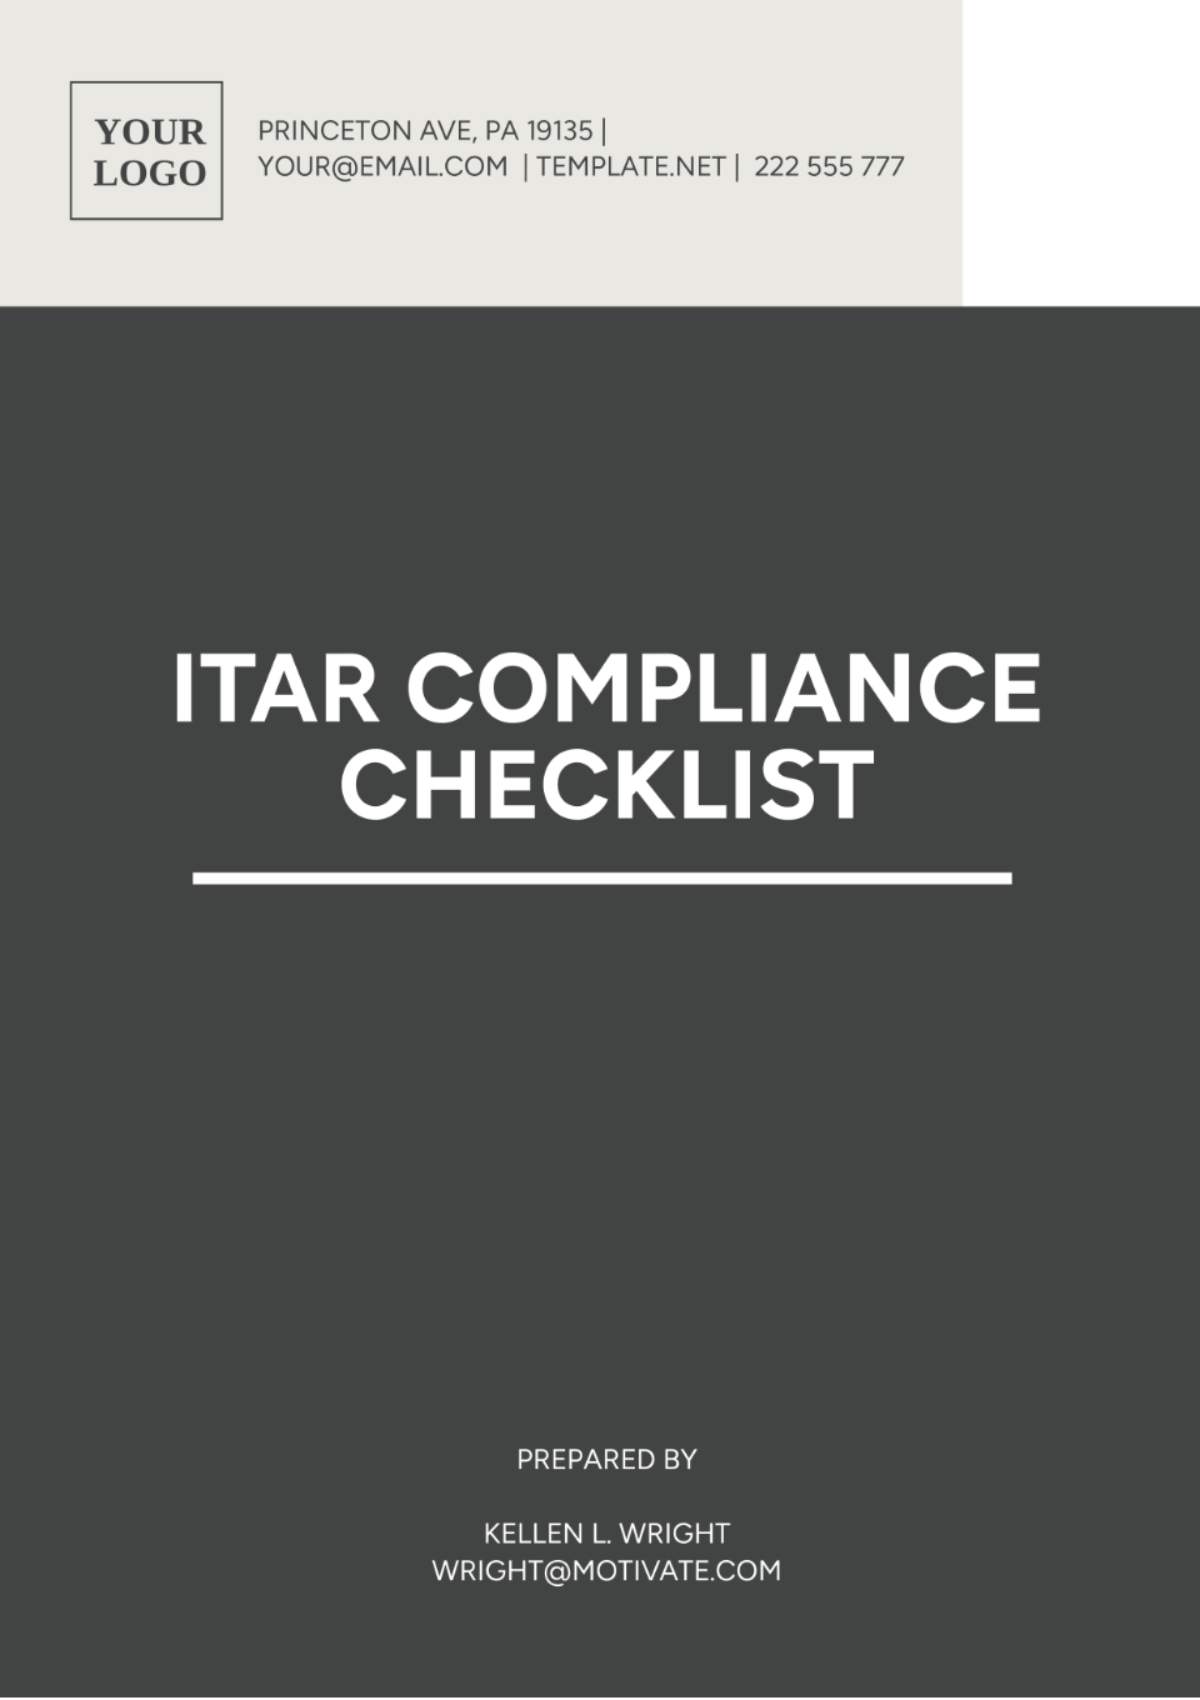 ITAR Compliance Checklist Template